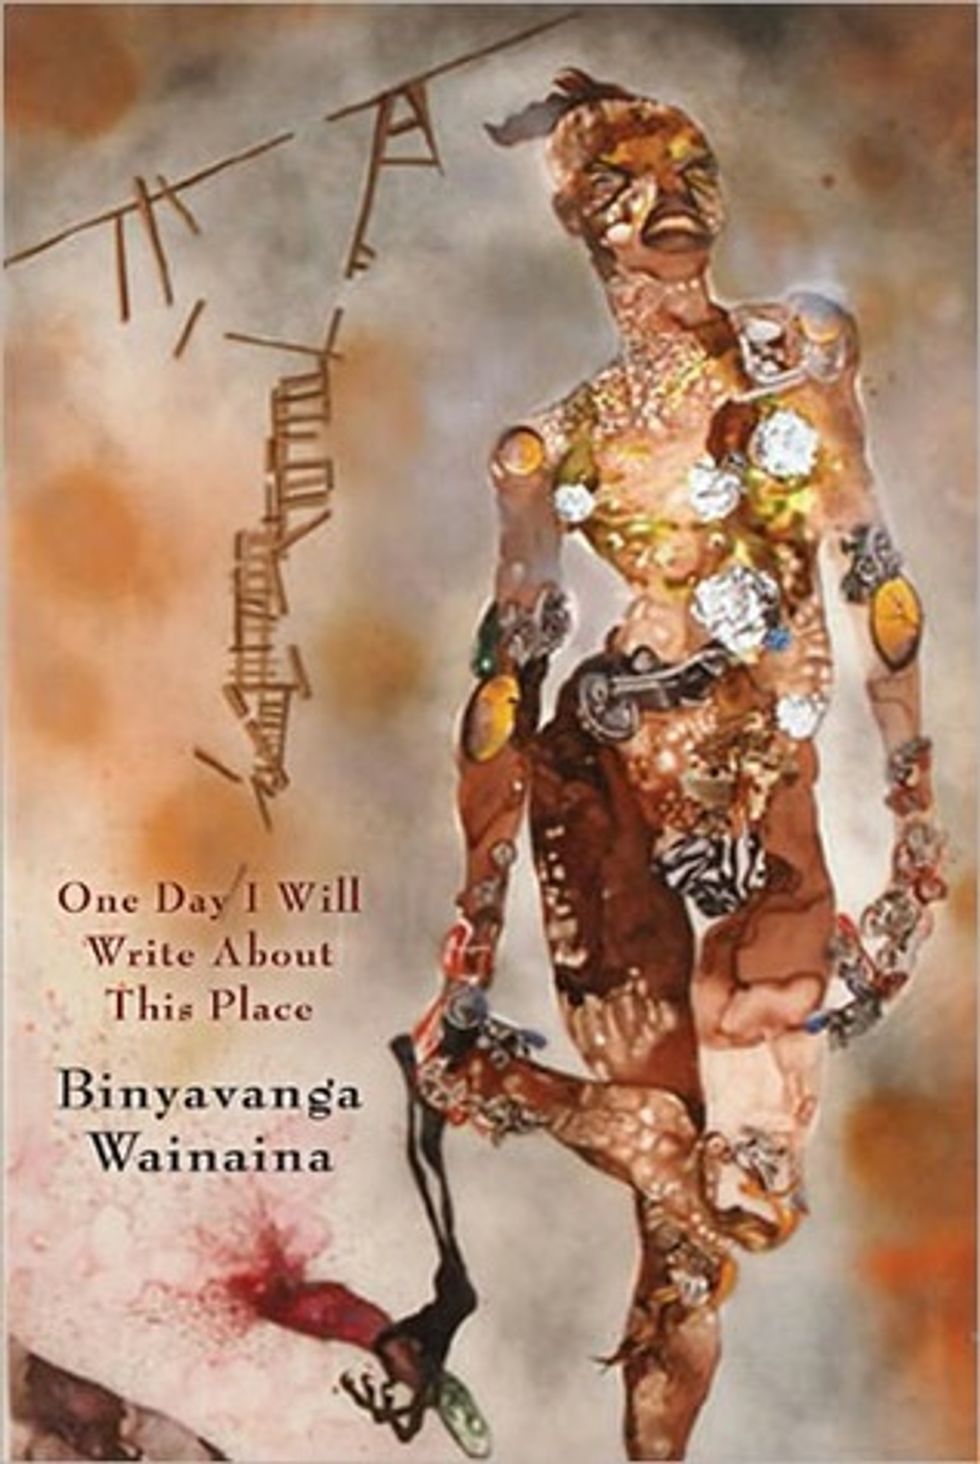 Binyavanga Wainaina Writes About That Place - OkayAfrica